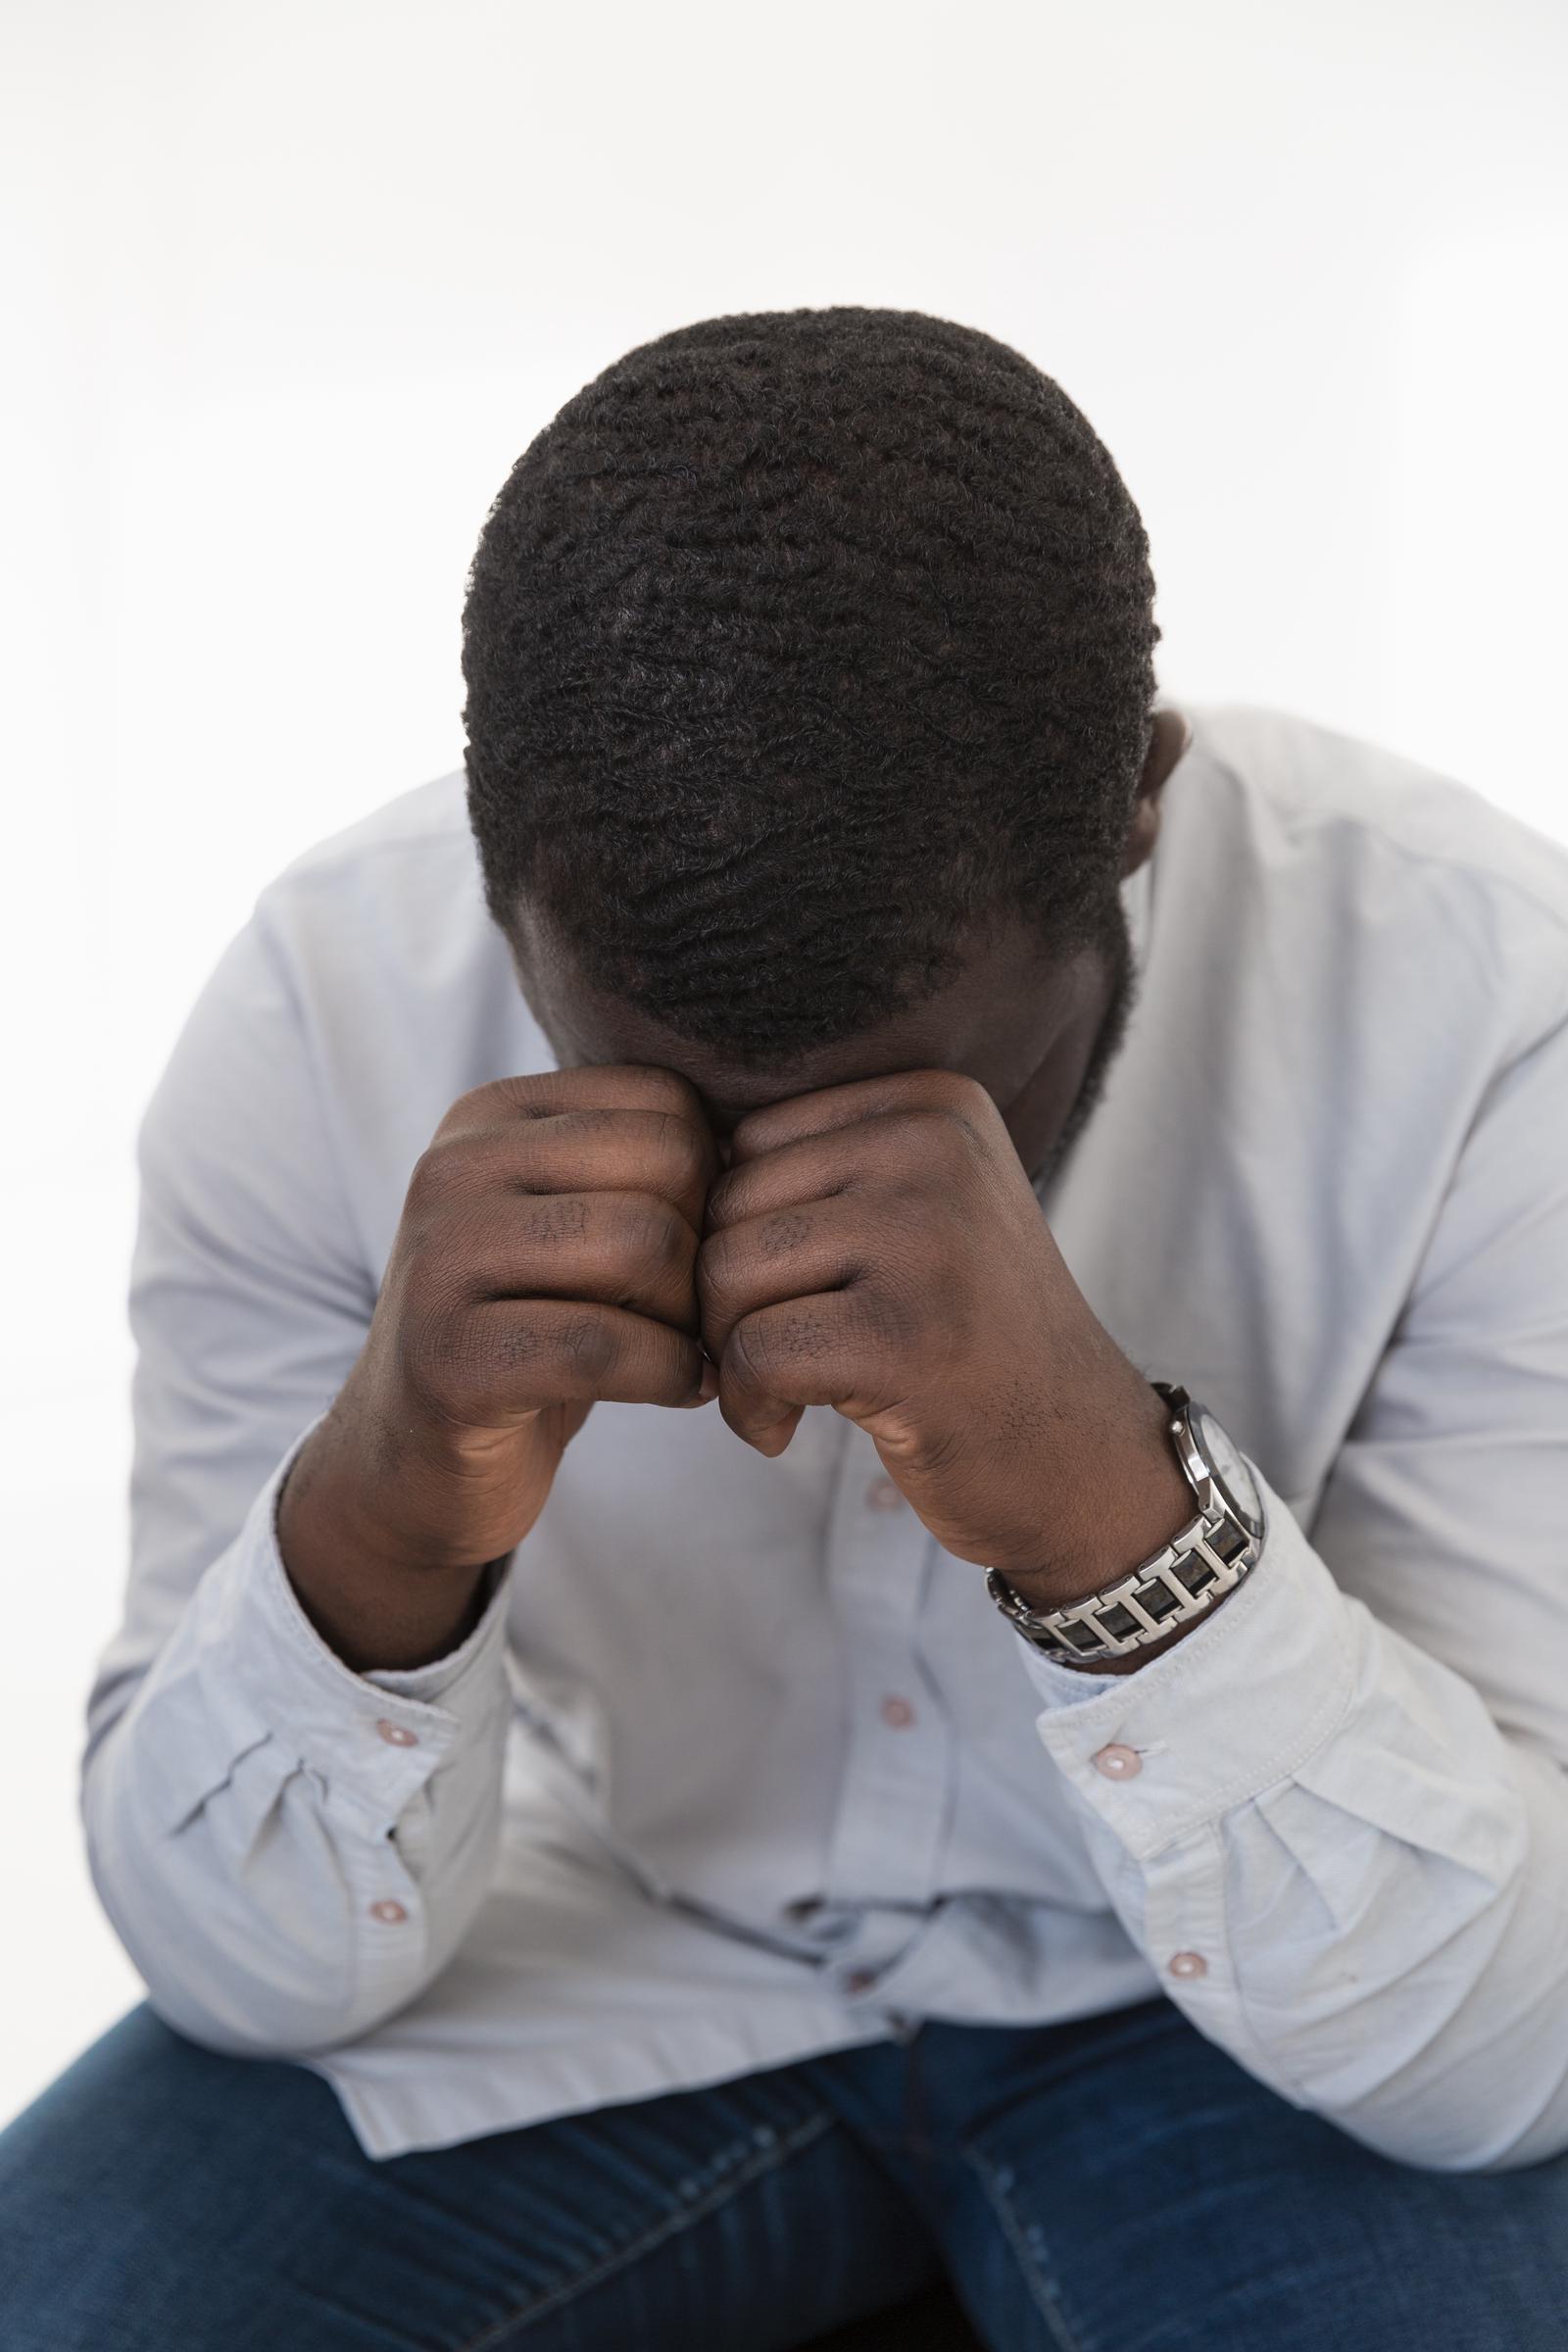 A depressed black man | Source: Freepik